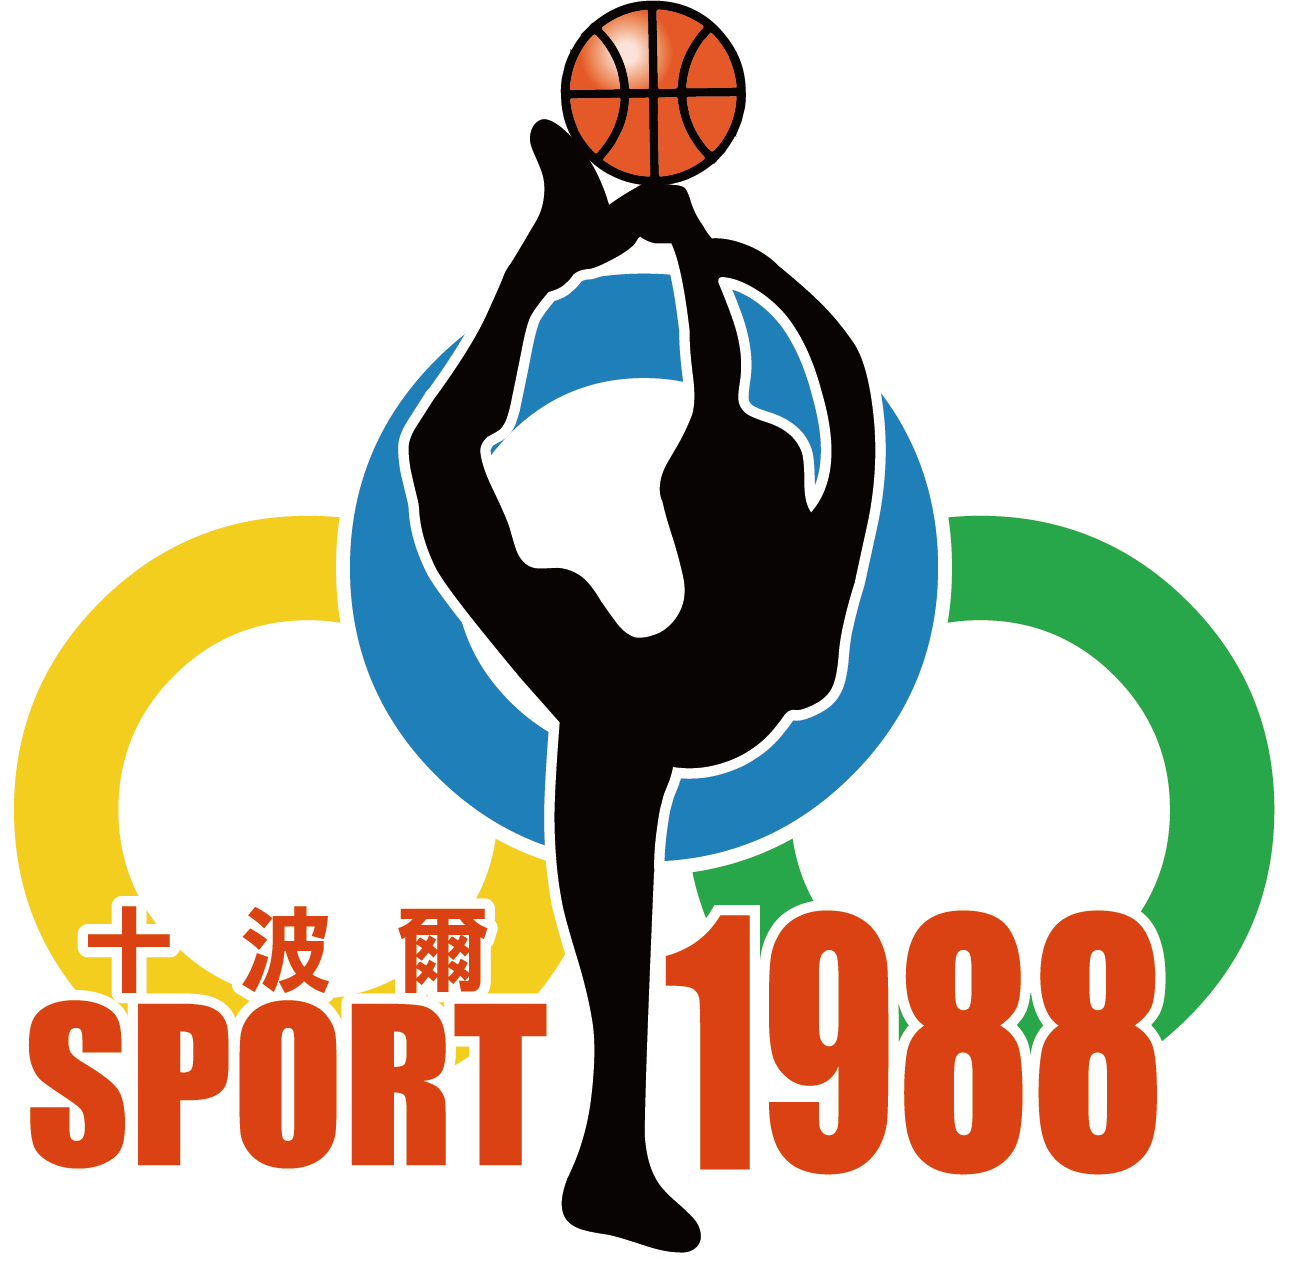 Sport 1988